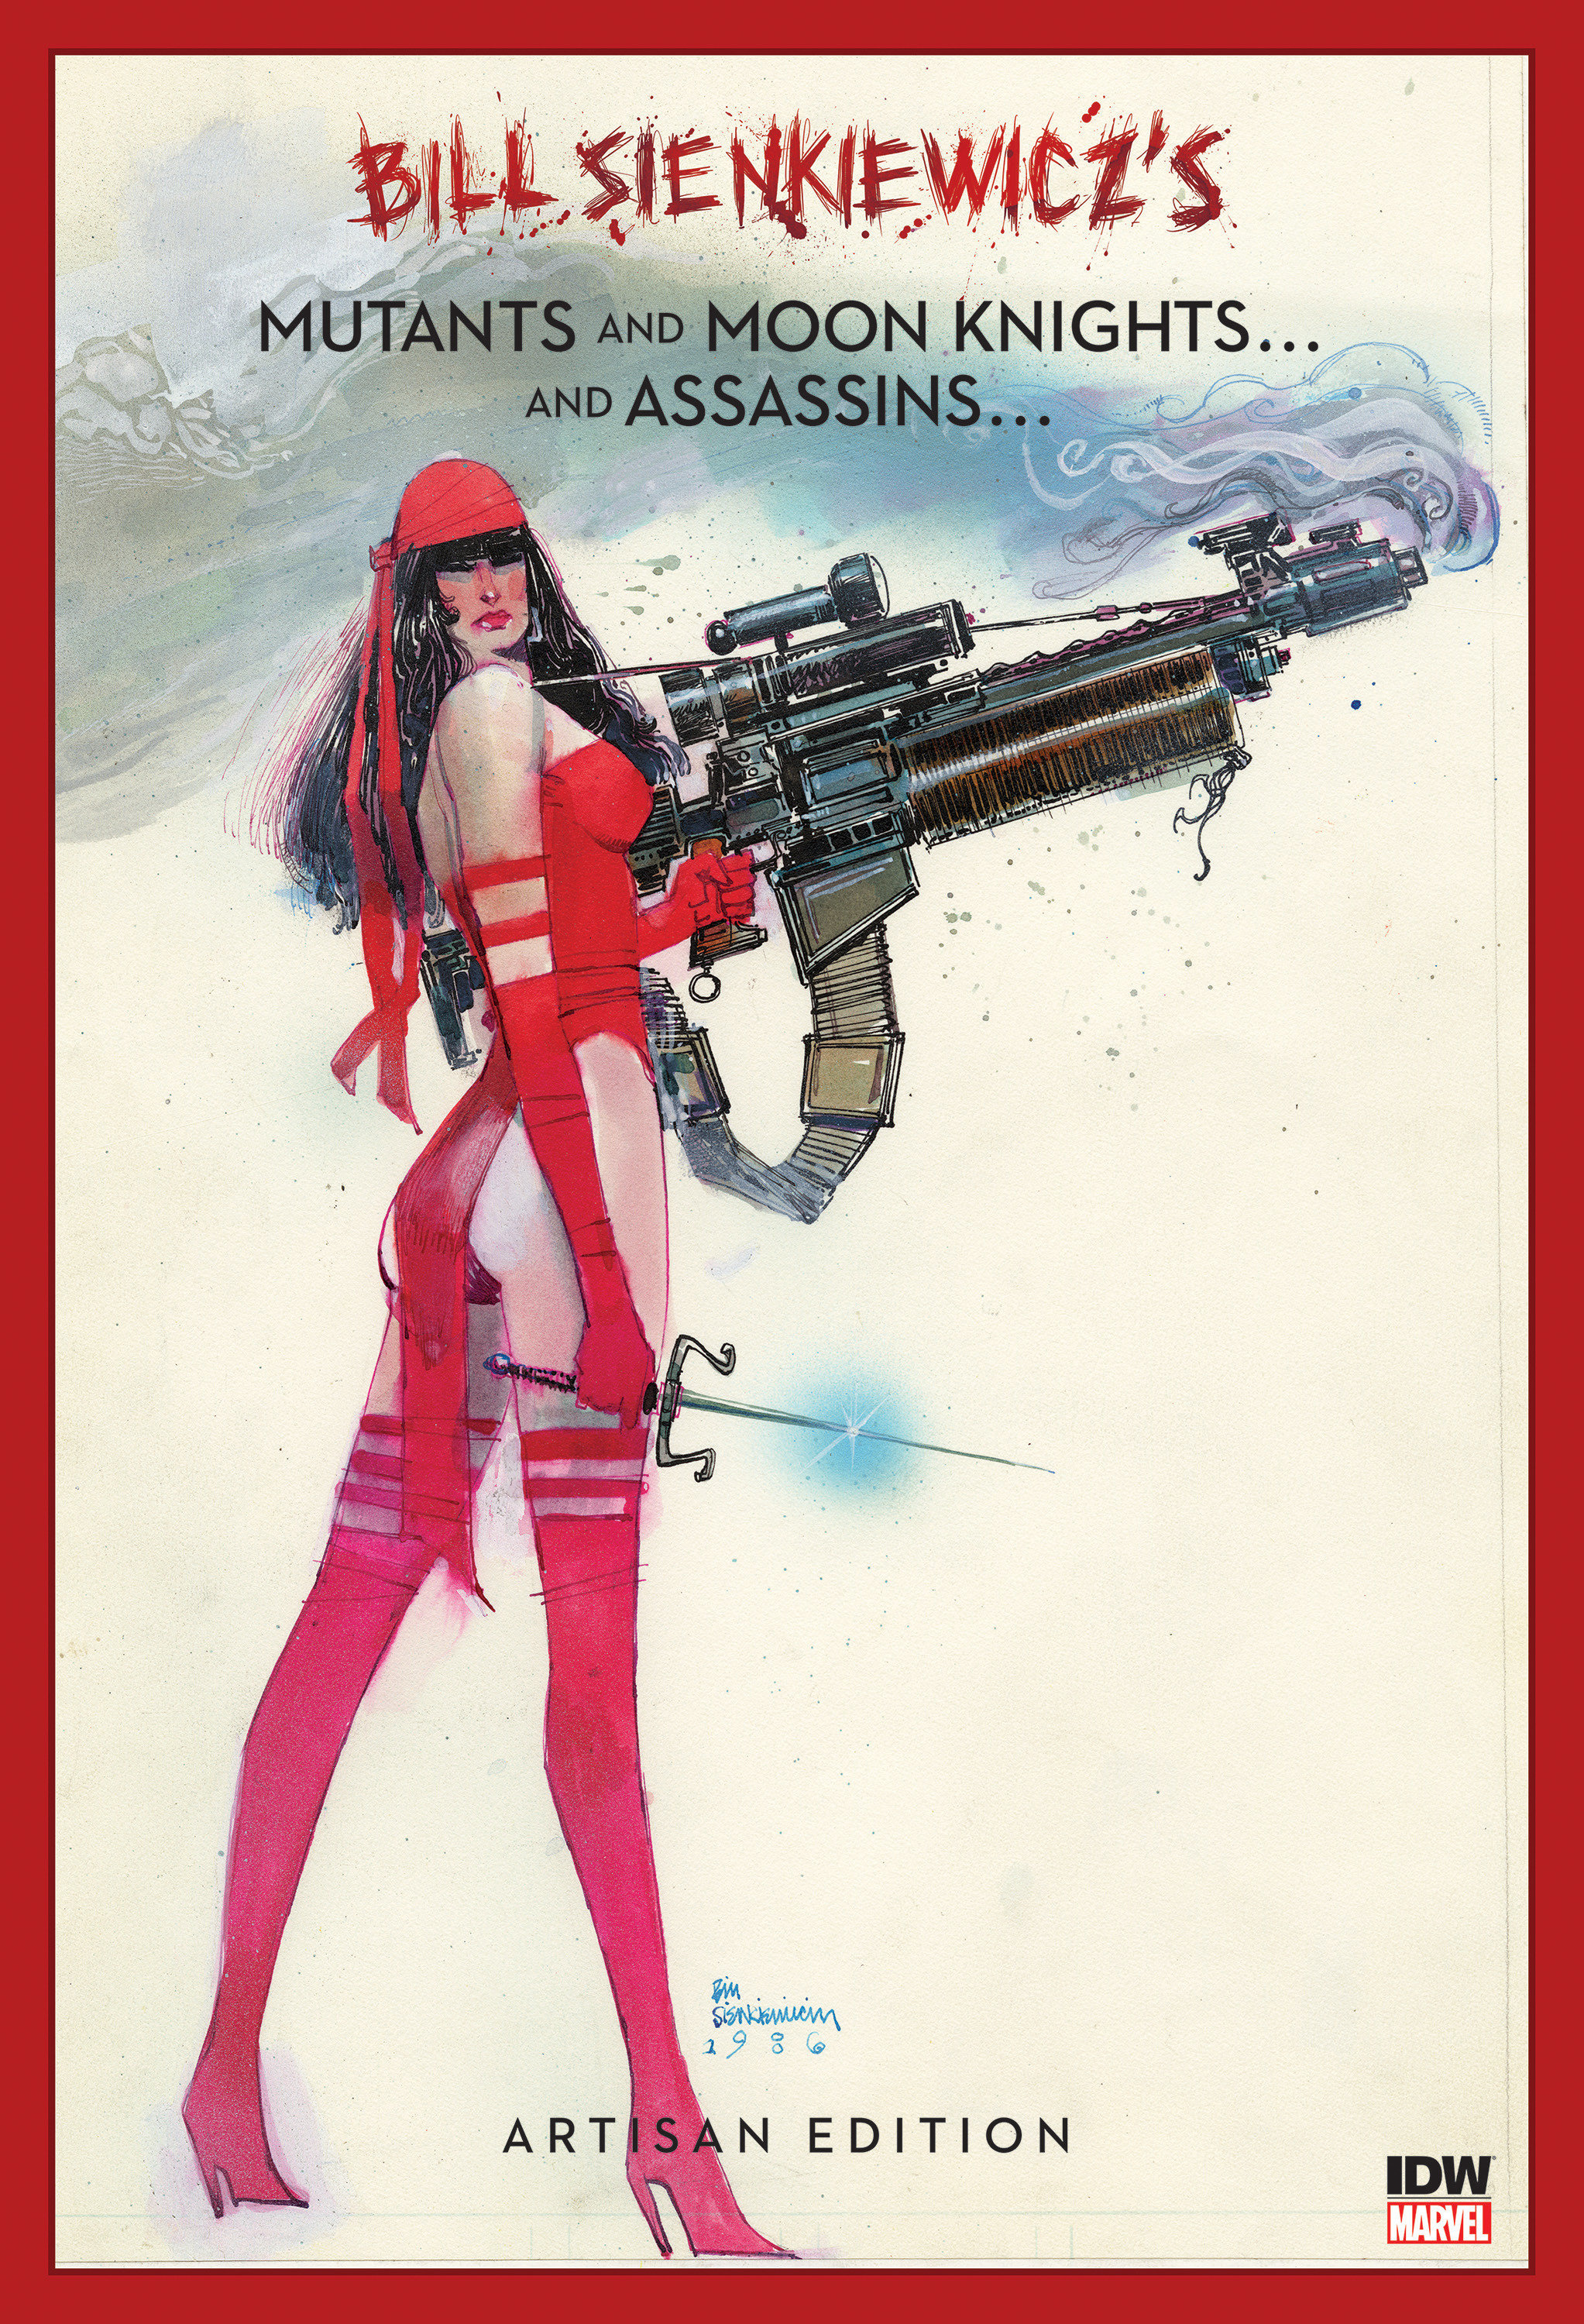 Artisan Edition Volume 7 Bill Sienkiewicz's Mutants and Moon Knights and Assassins Art